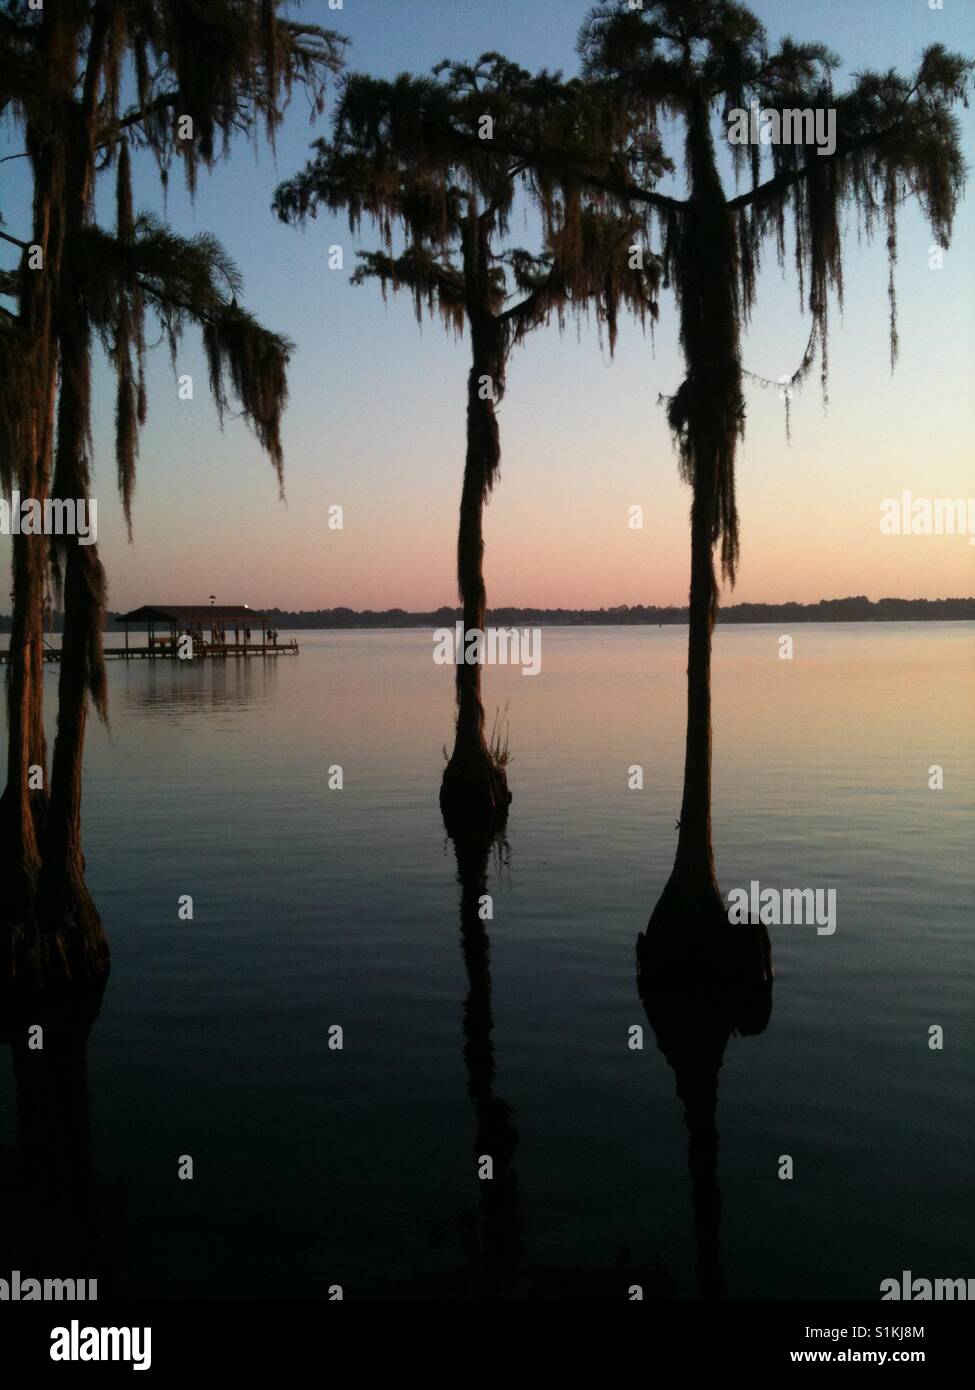 Sunrise at White Lake, North Carolina with Spanish Moss covered tree silhouettes Stock Photo